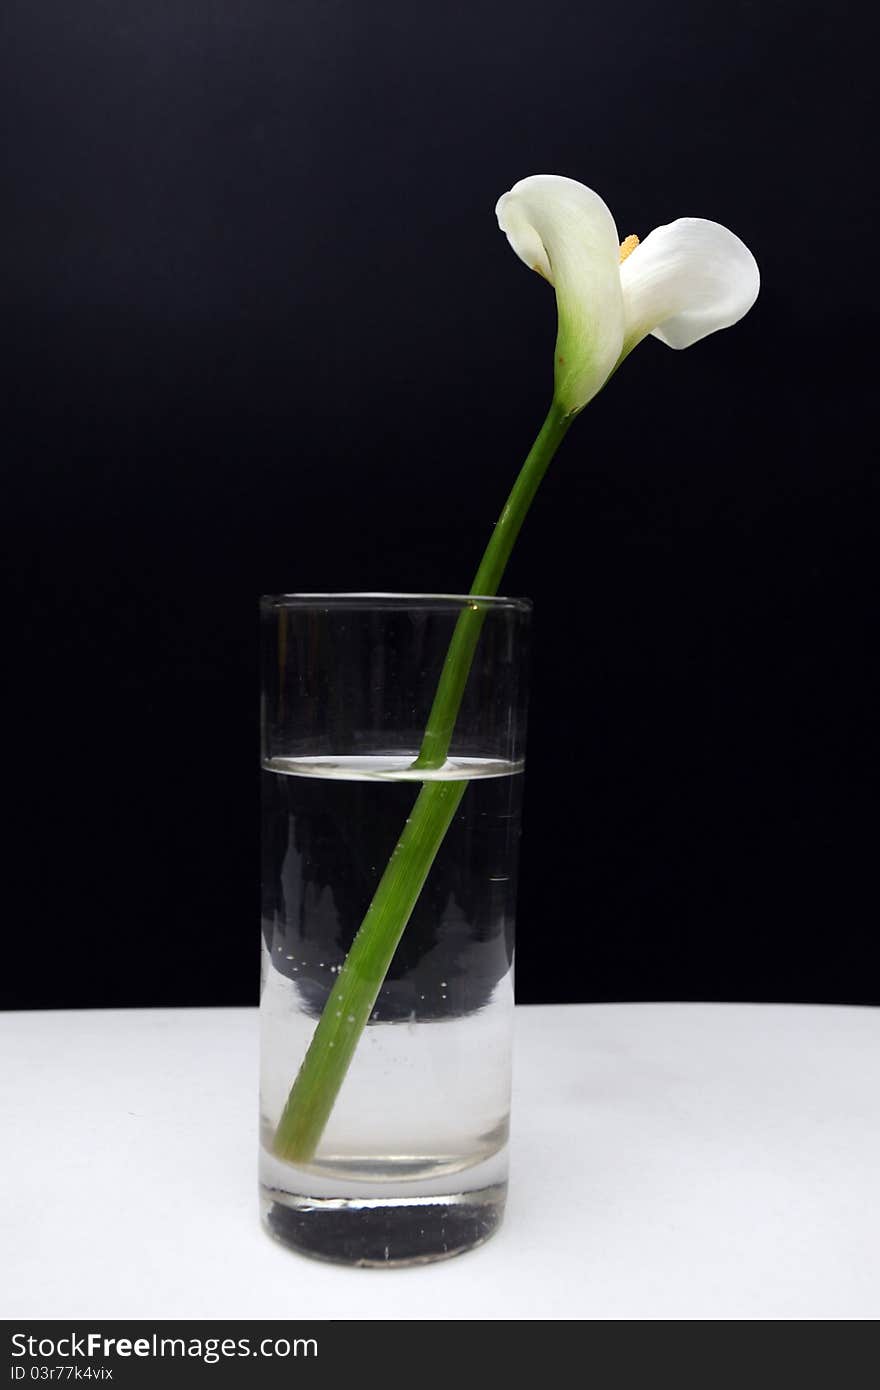 Flower in a water glass